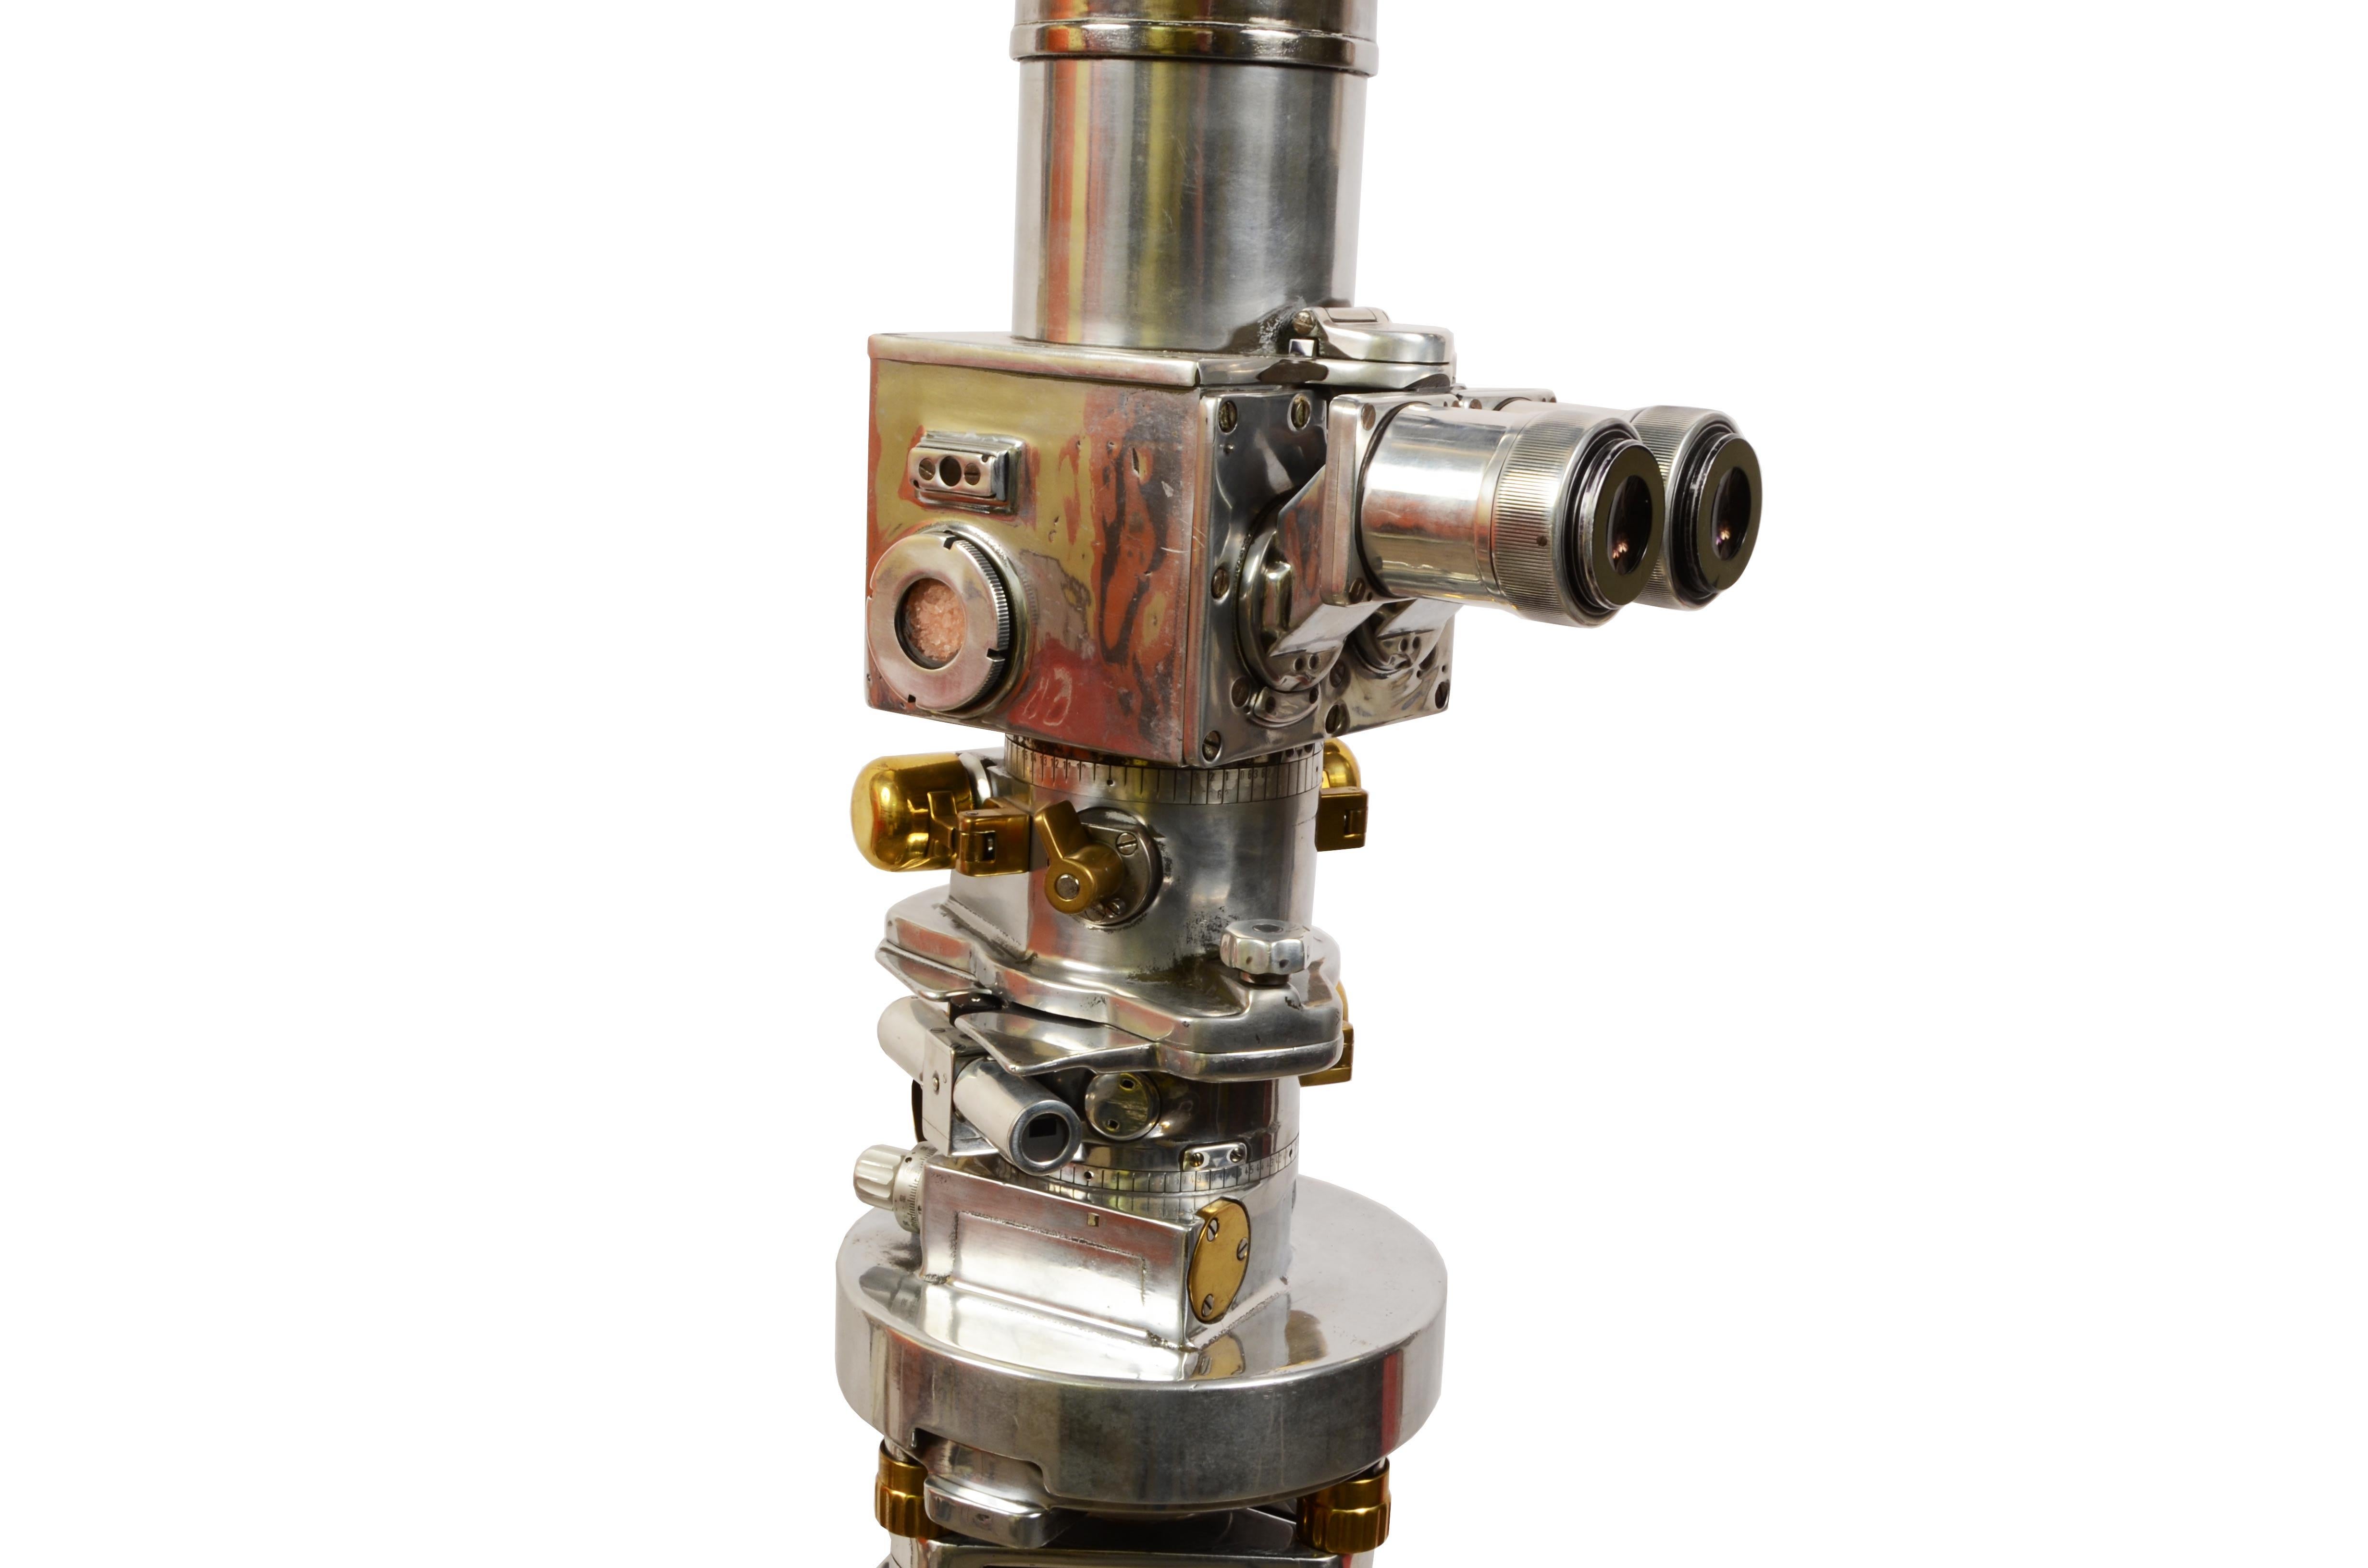 Mid-20th Century 1950s Carl Zeiss Antique Binocular Periscope Surveyor Scientific Instrument